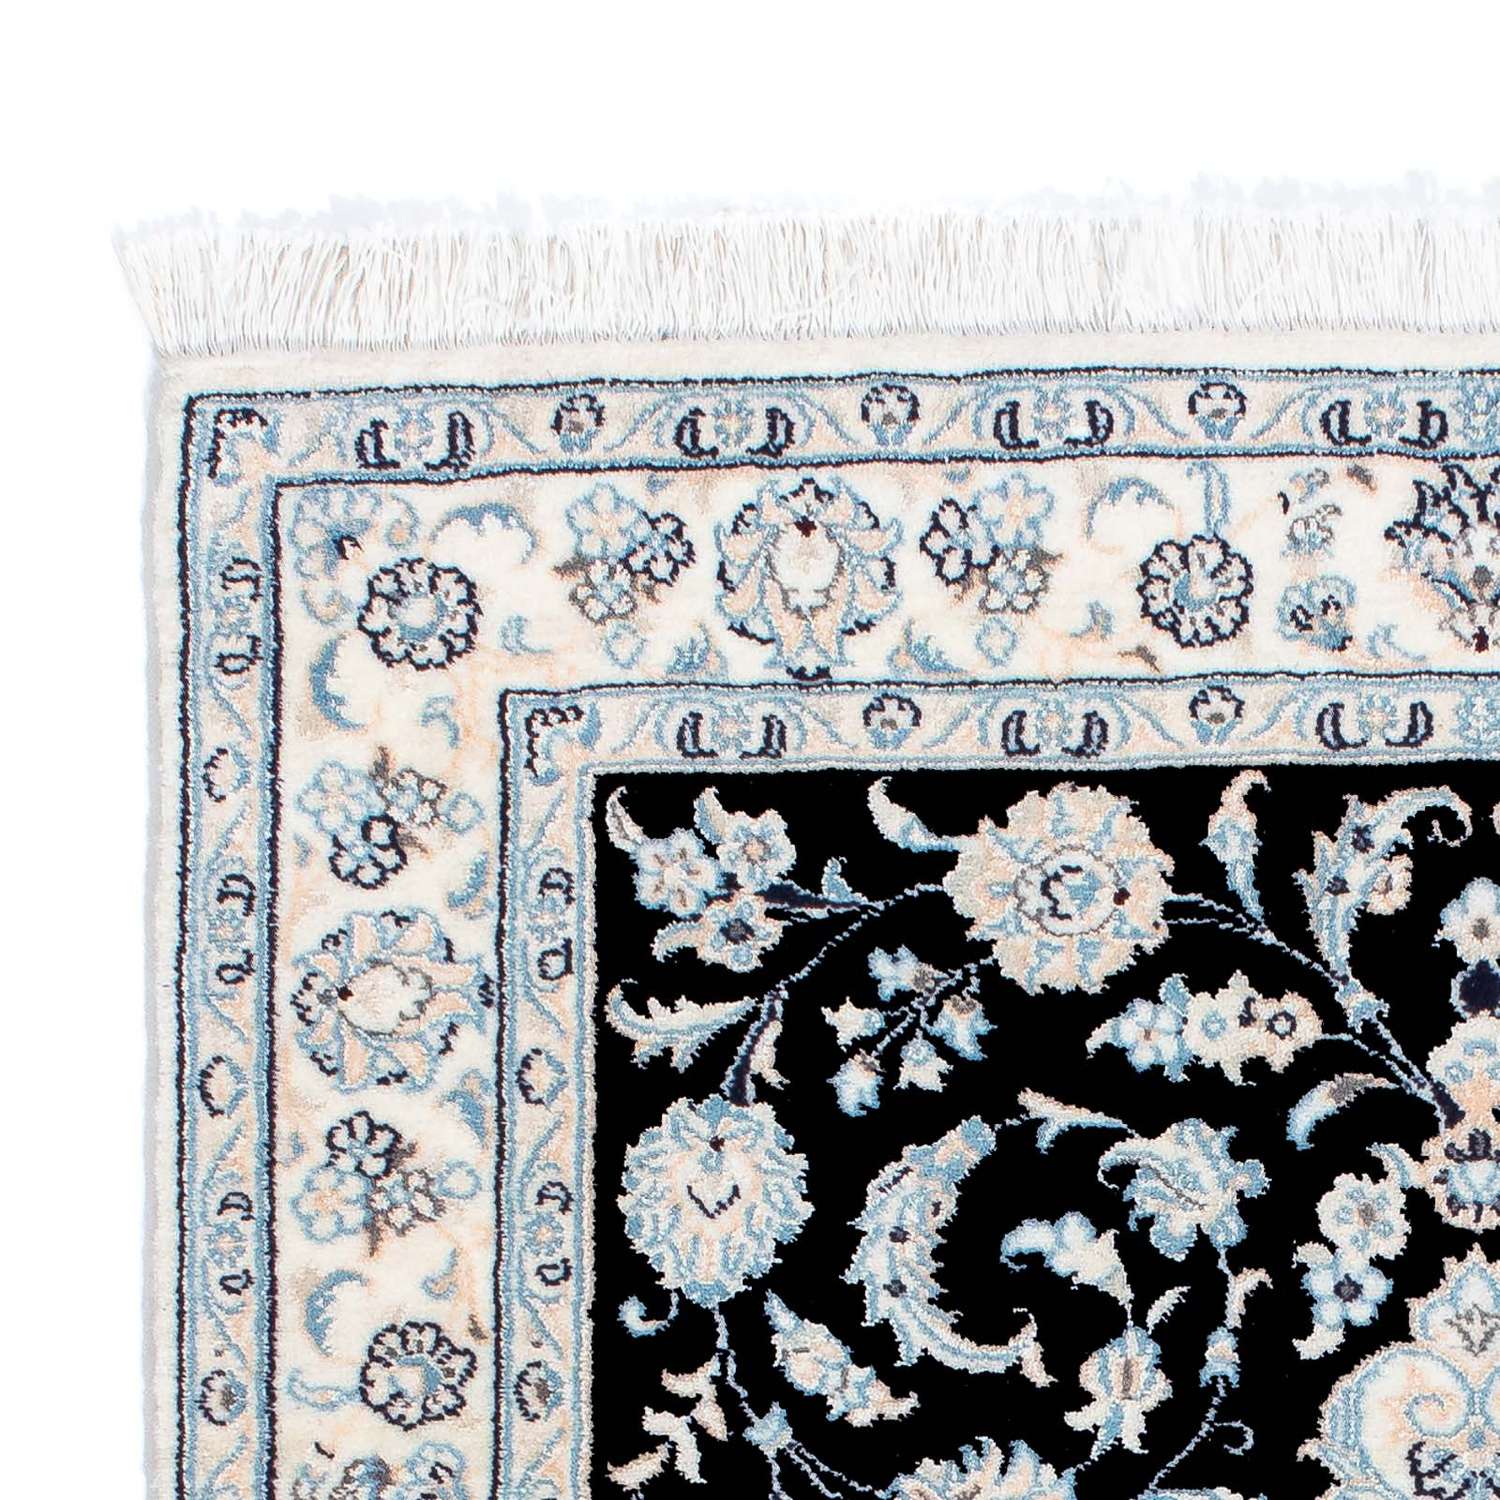 Perzisch tapijt - Nain - Koninklijk - 150 x 100 cm - donkerblauw